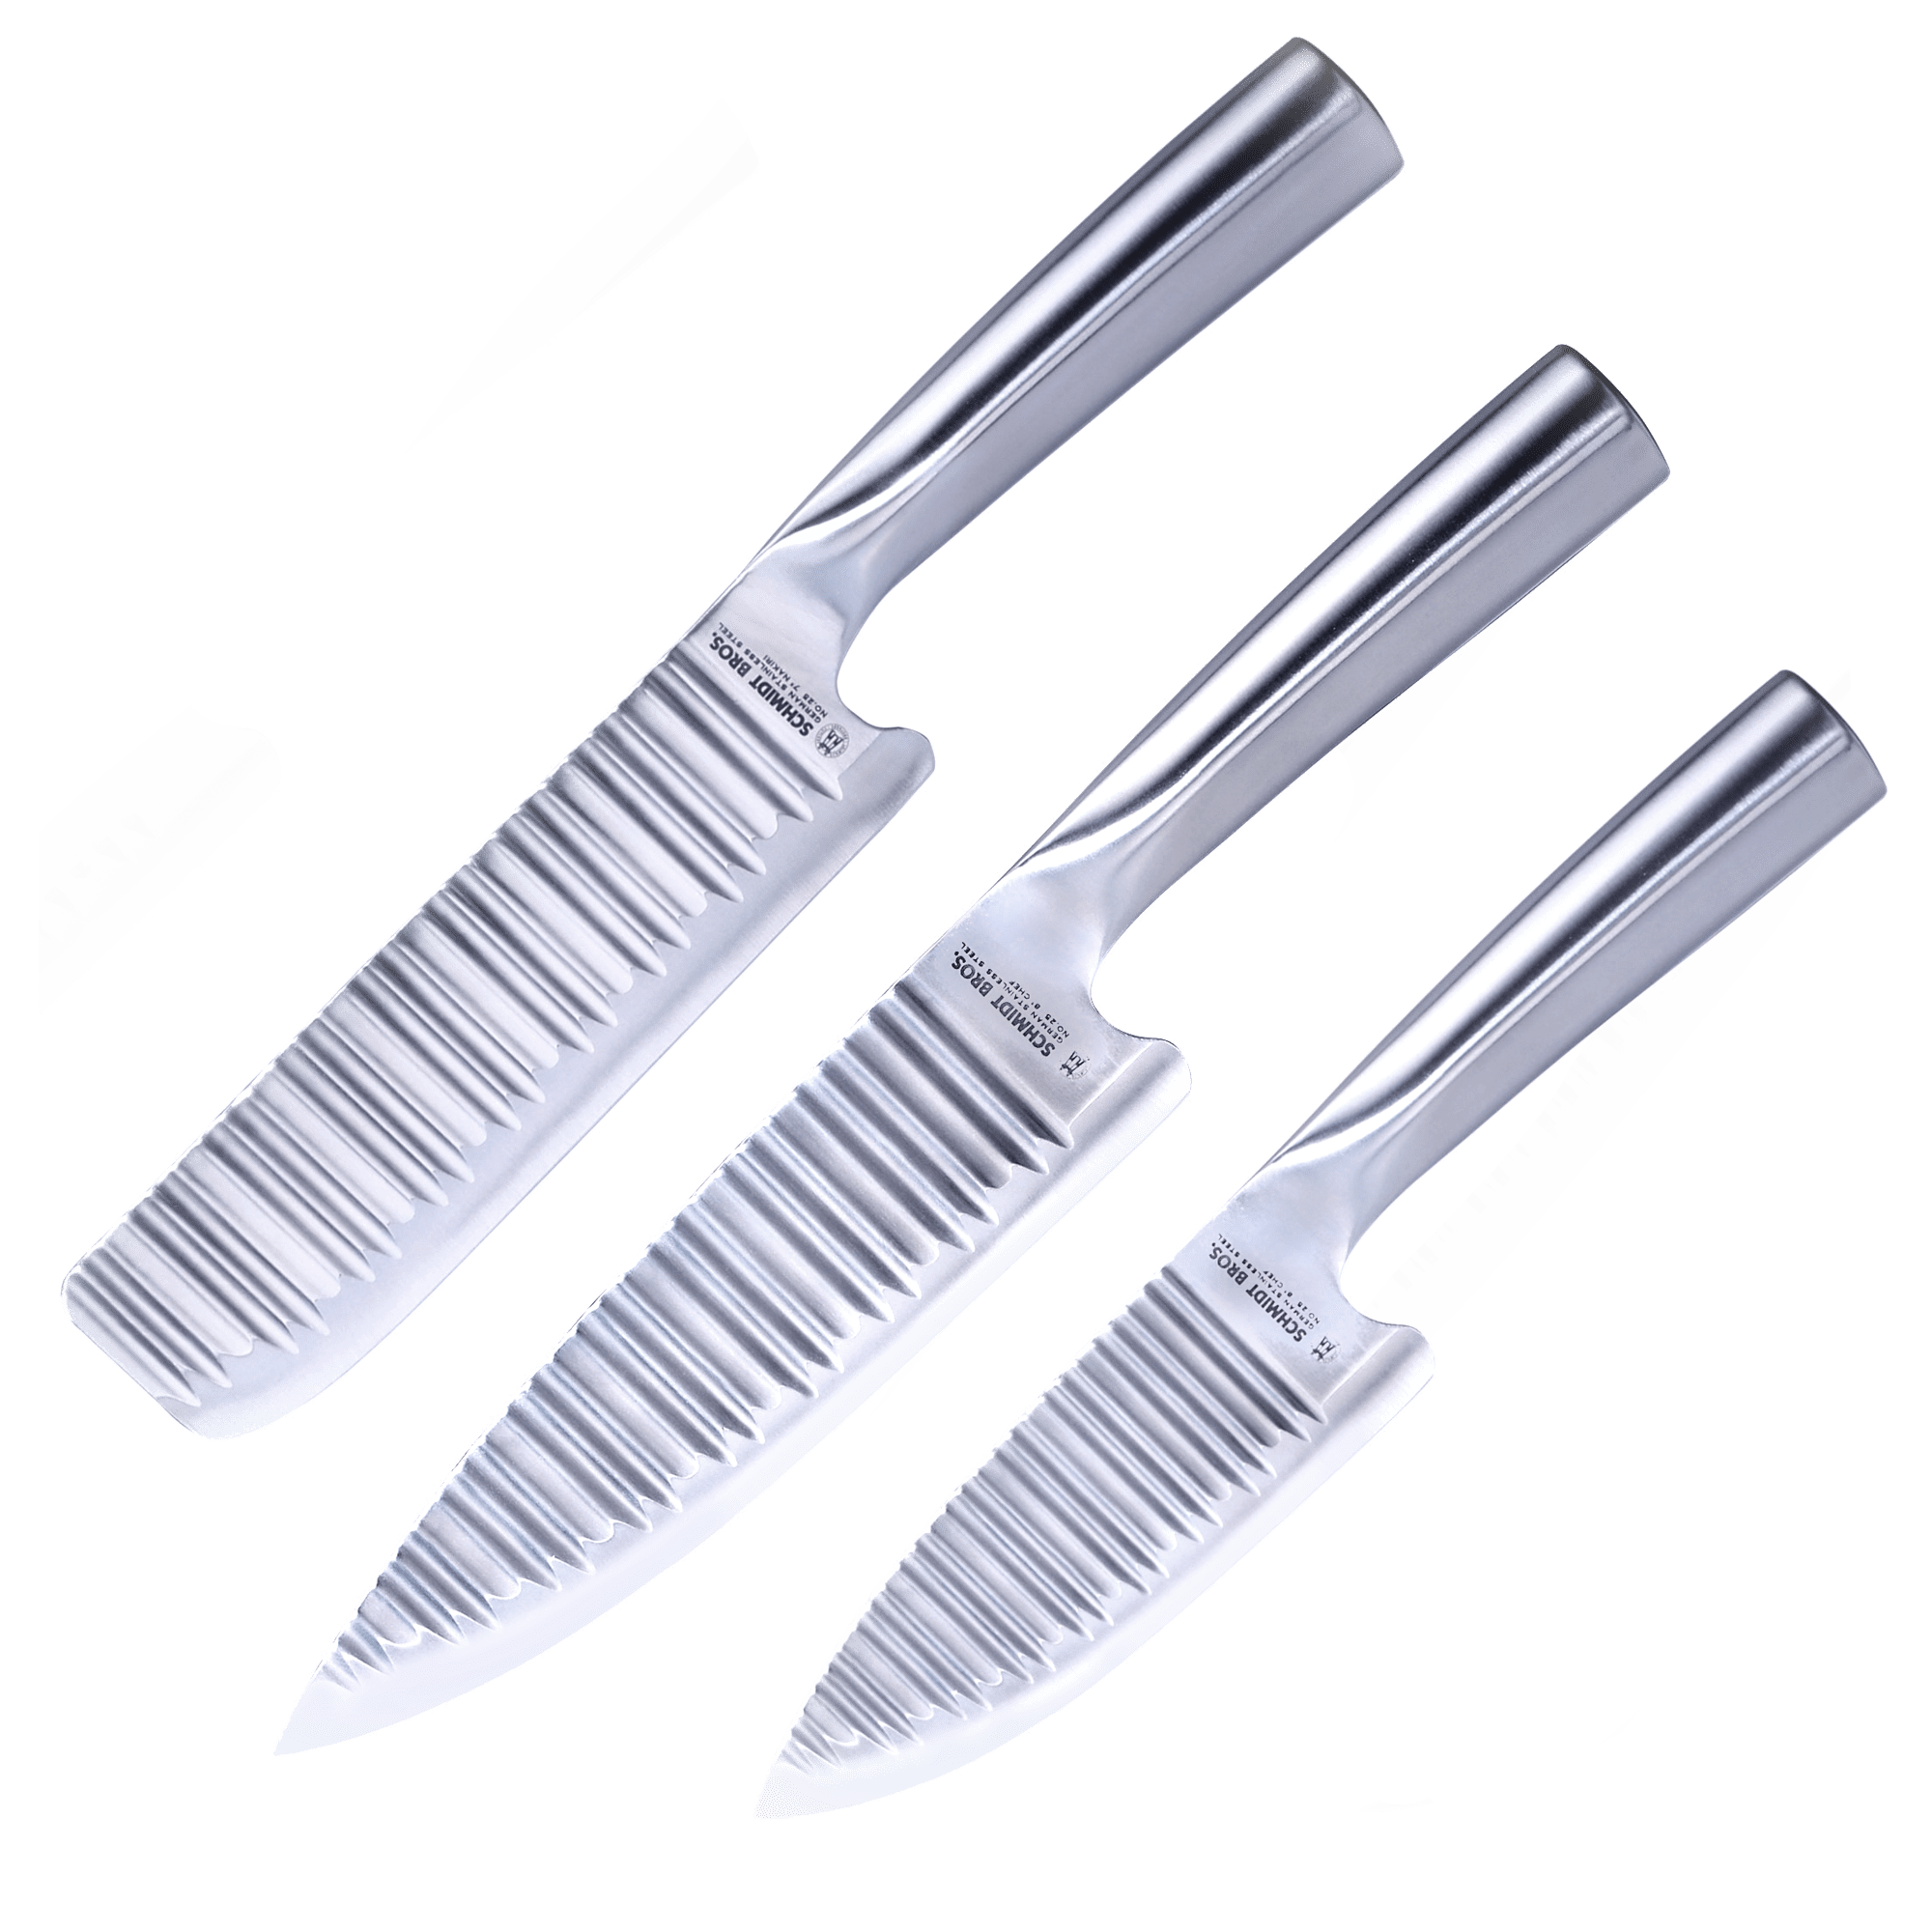 Deglon Meeting Knife Set